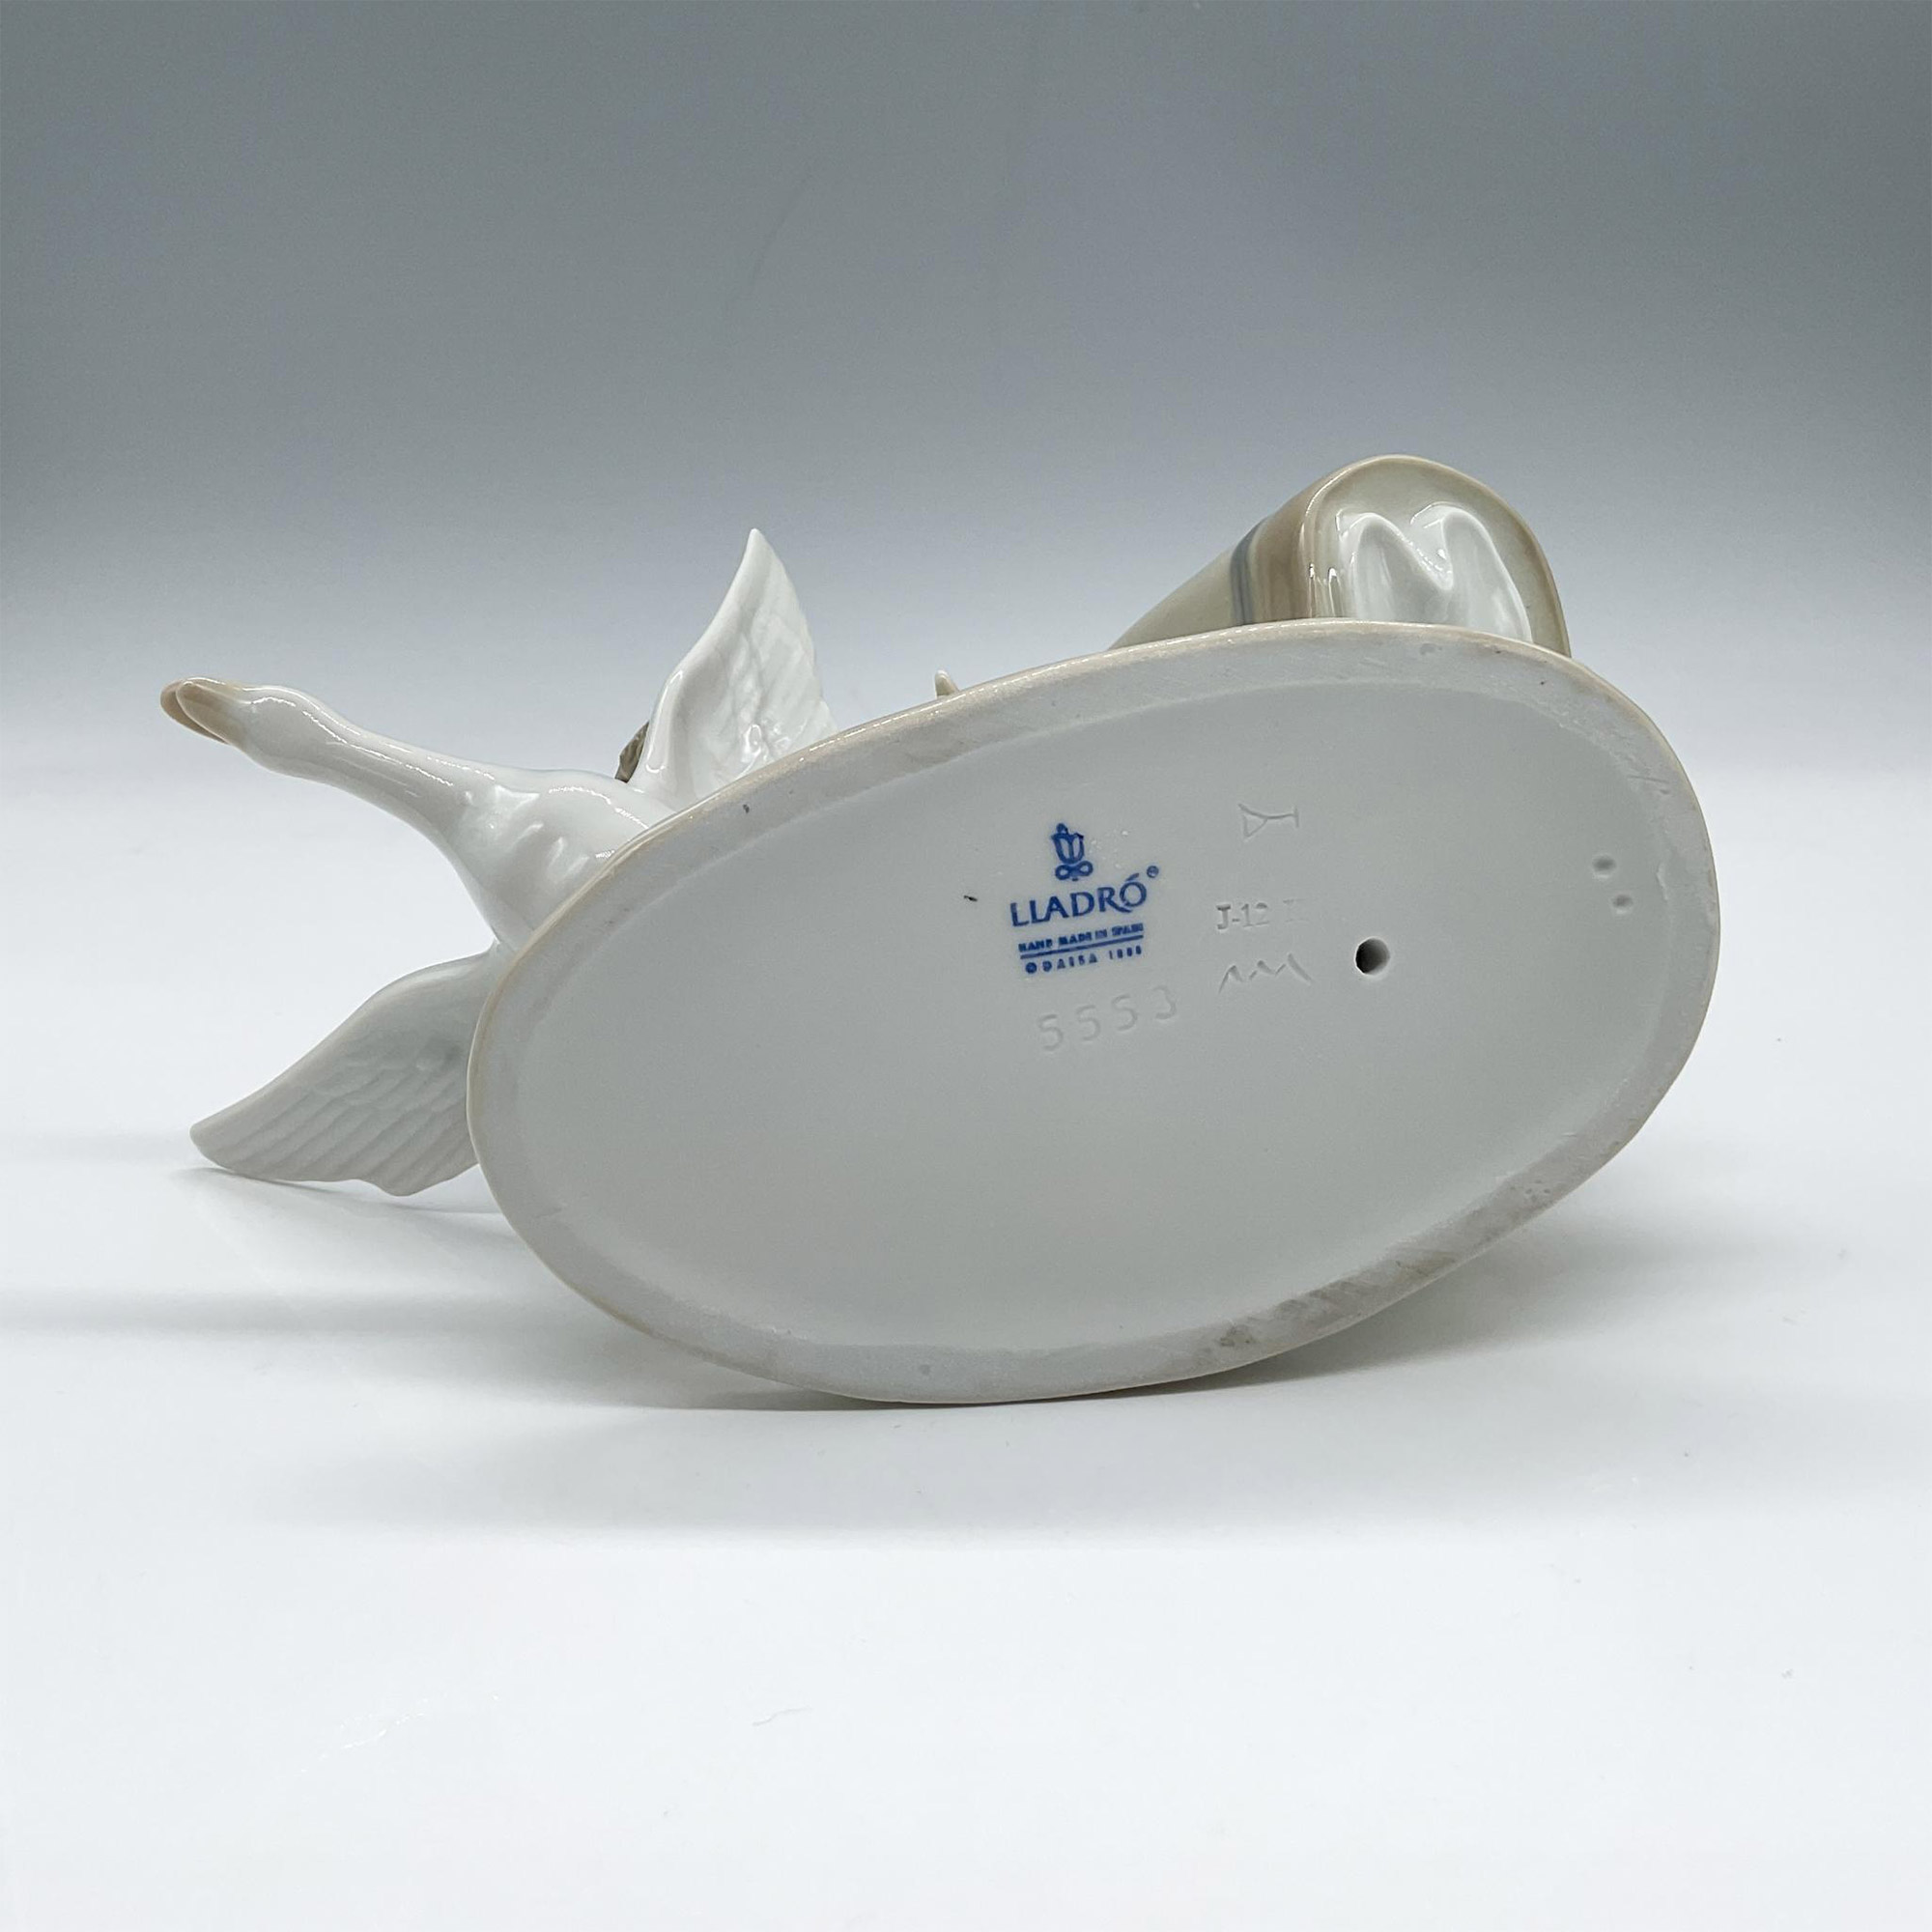 Wild Goose Chase 1005553 - Lladro Porcelain Figurine - Image 3 of 3